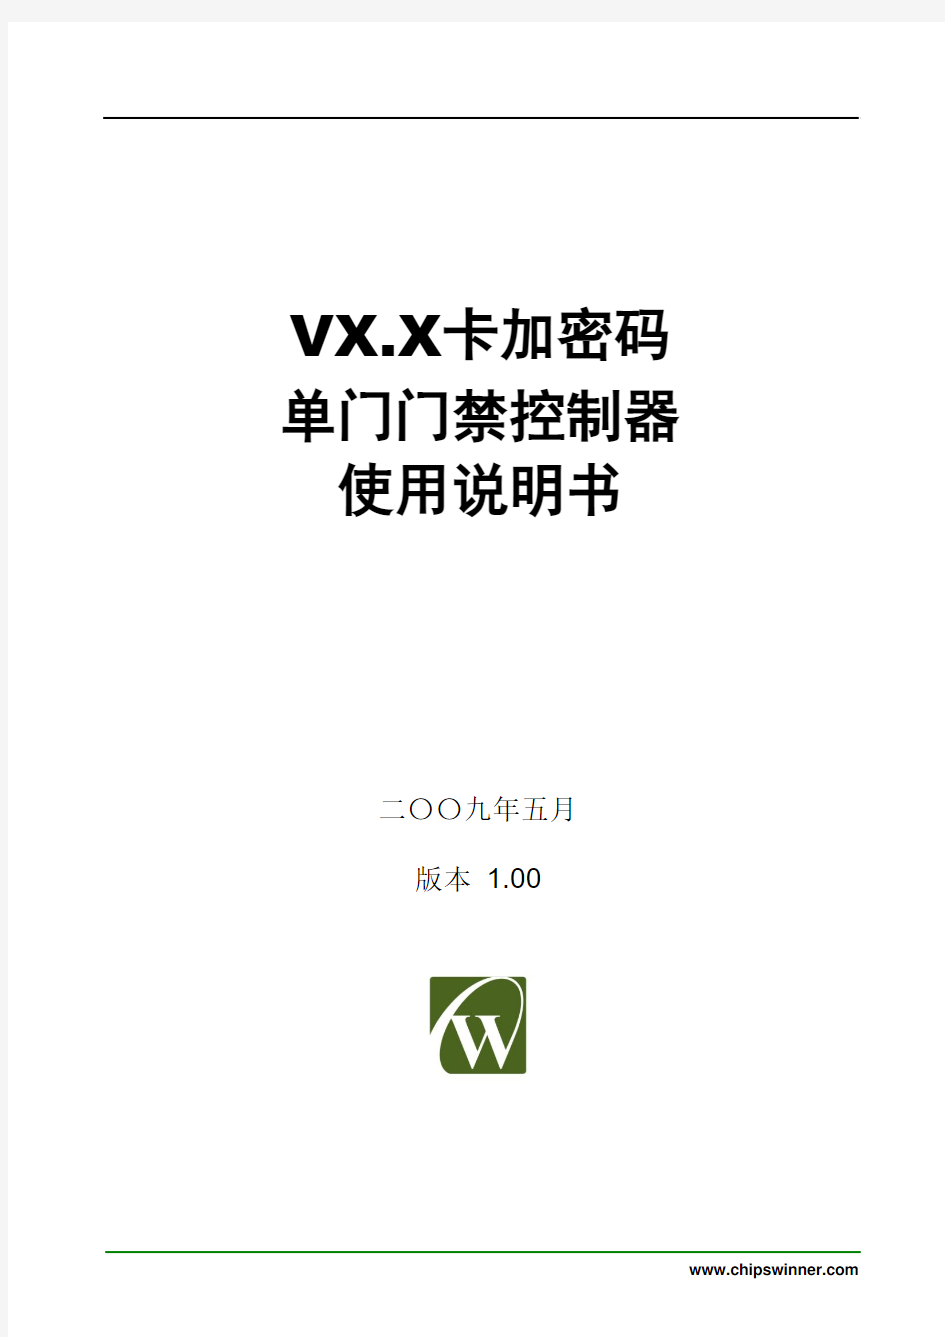 VX X 卡加密码 单门门禁控制器 使用说明书